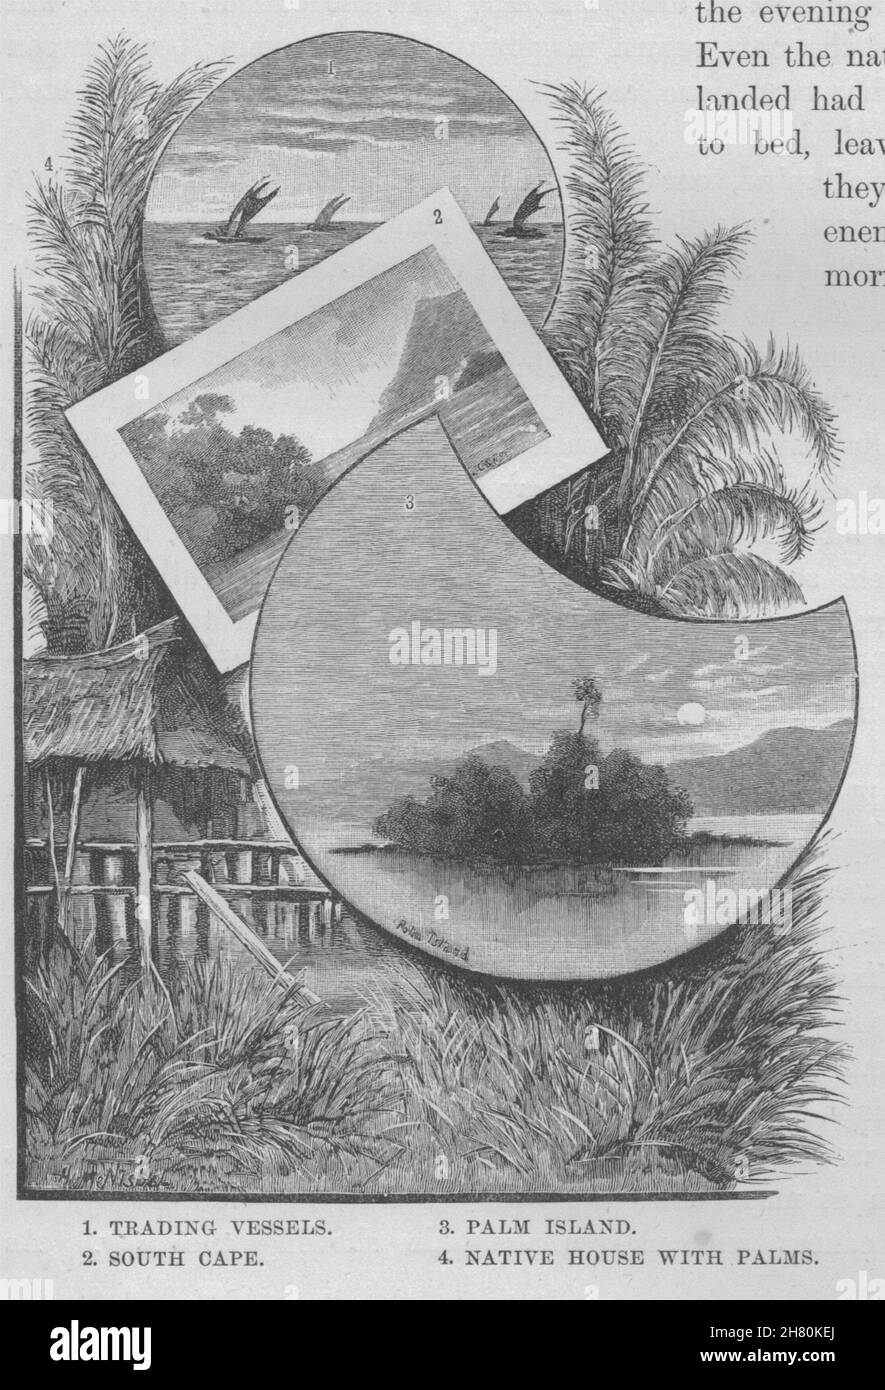 Trading Vessels. South Cape. Palm Island. Native house Palms. New Guinea 1890 Stock Photo